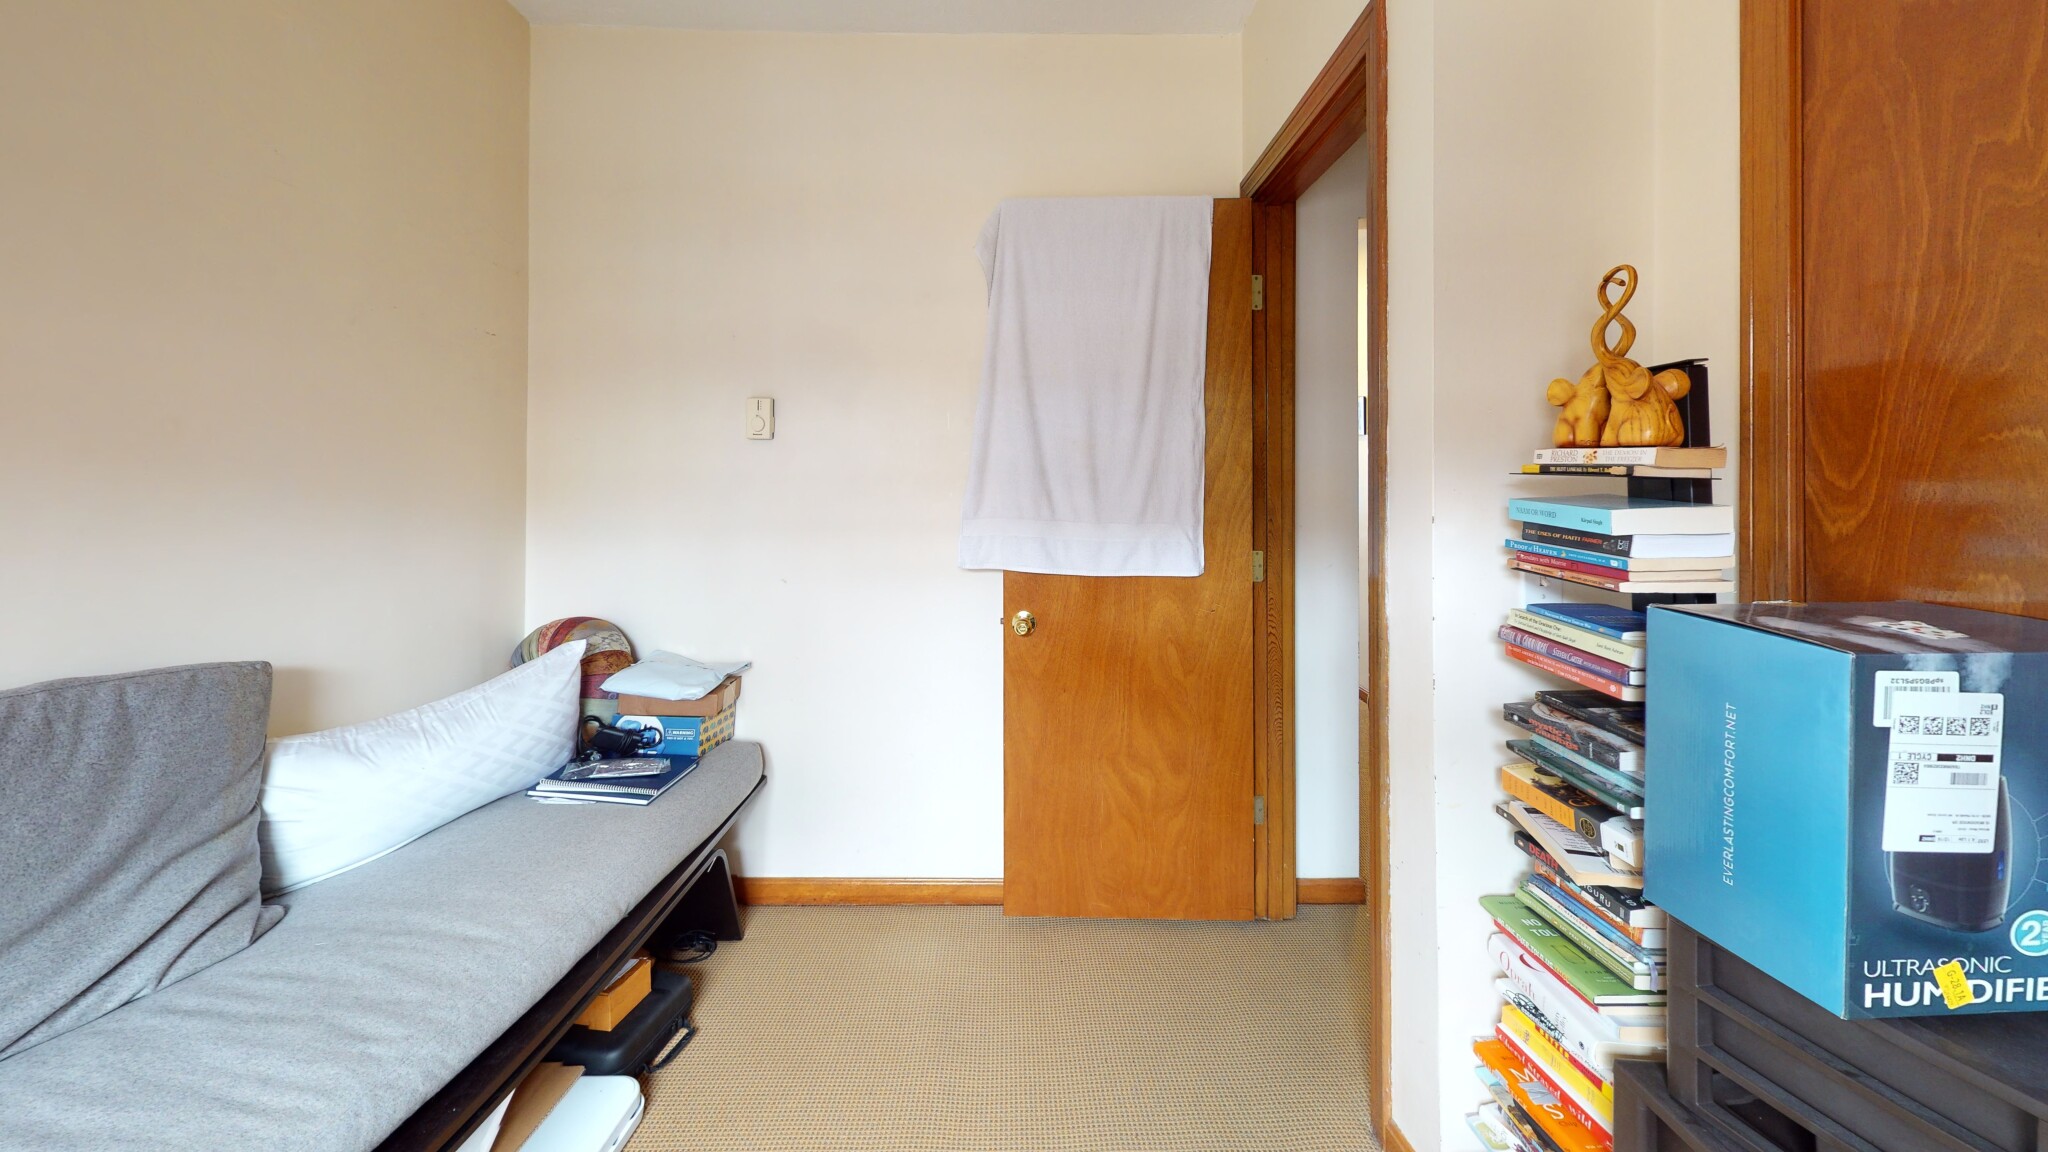 Photos of apartment on Hudson St.,Boston MA 02111